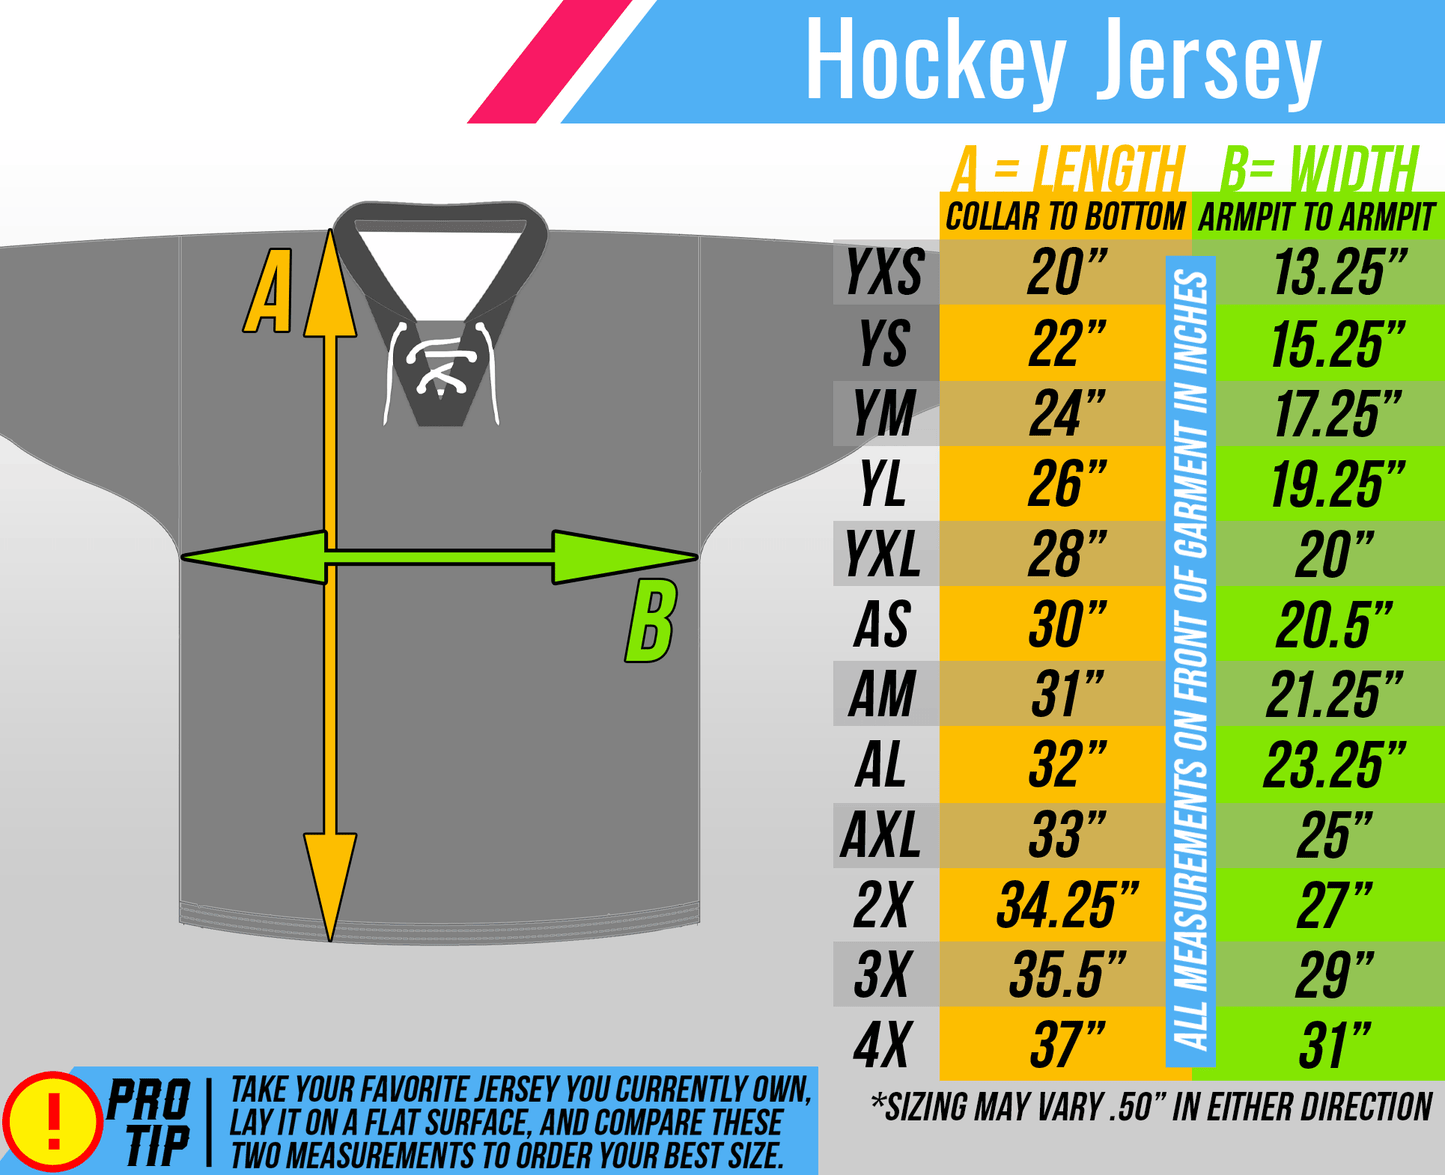 Royal Guard Dark Side Lace-up Hockey Jersey Sweater